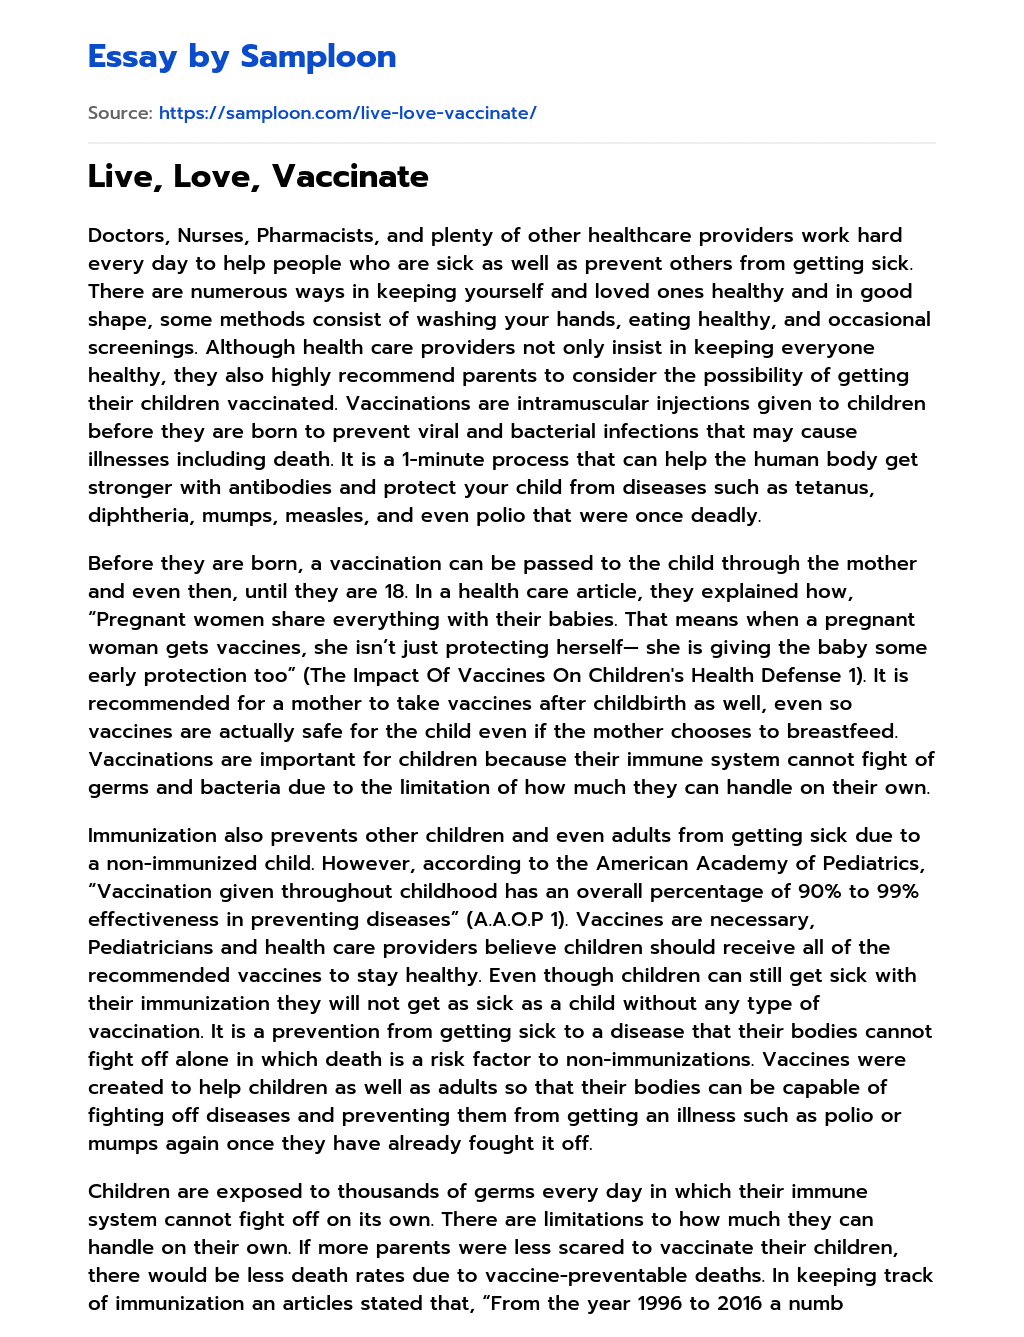 Live, Love, Vaccinate essay